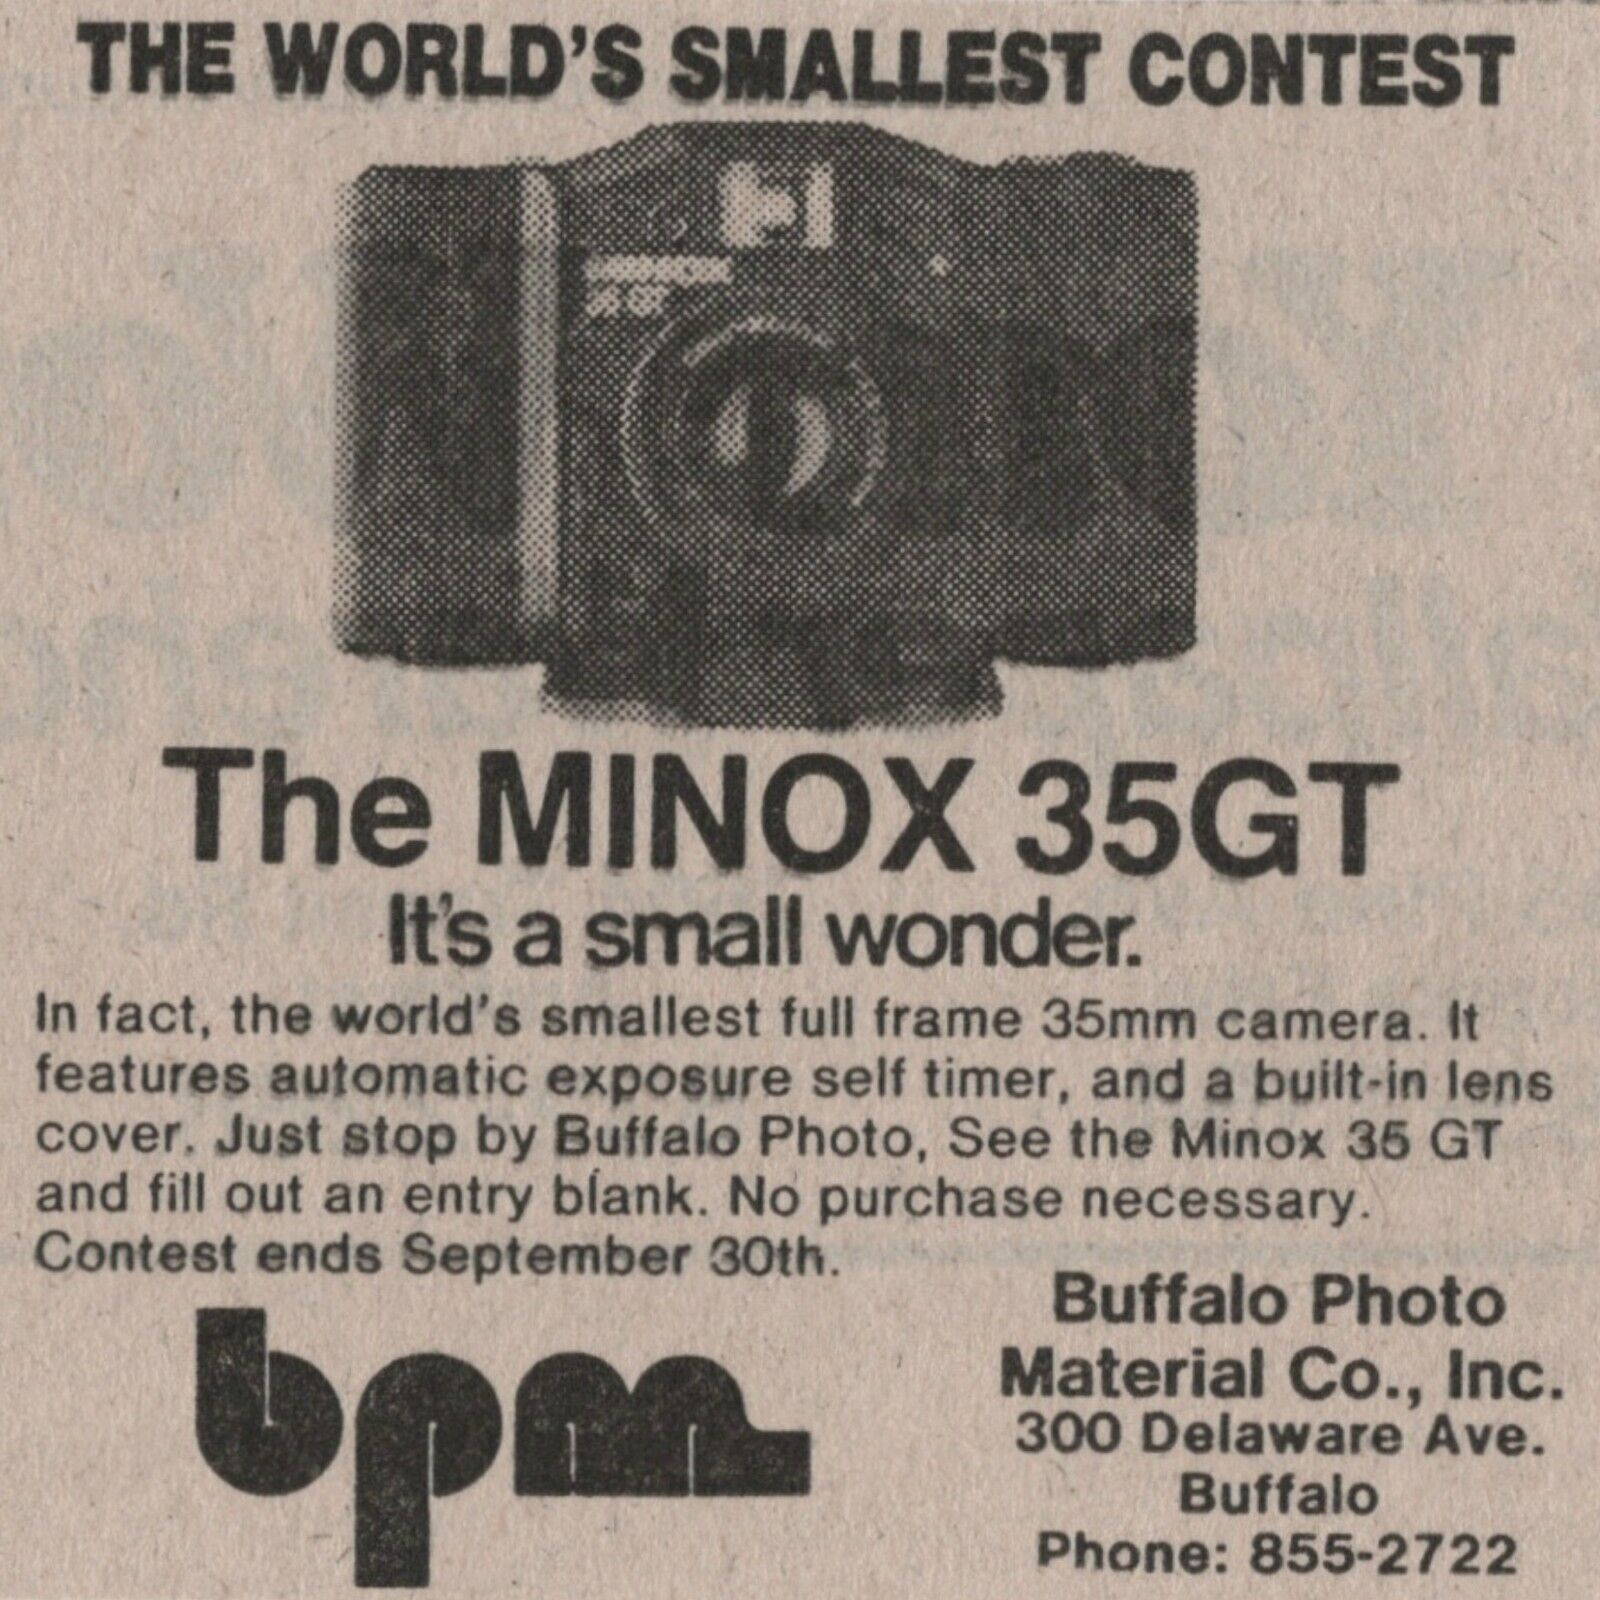 Vtg 1982 Buffalo Photo Material Co Newspaper Clipping Ad Minox 35 GT Film Camera